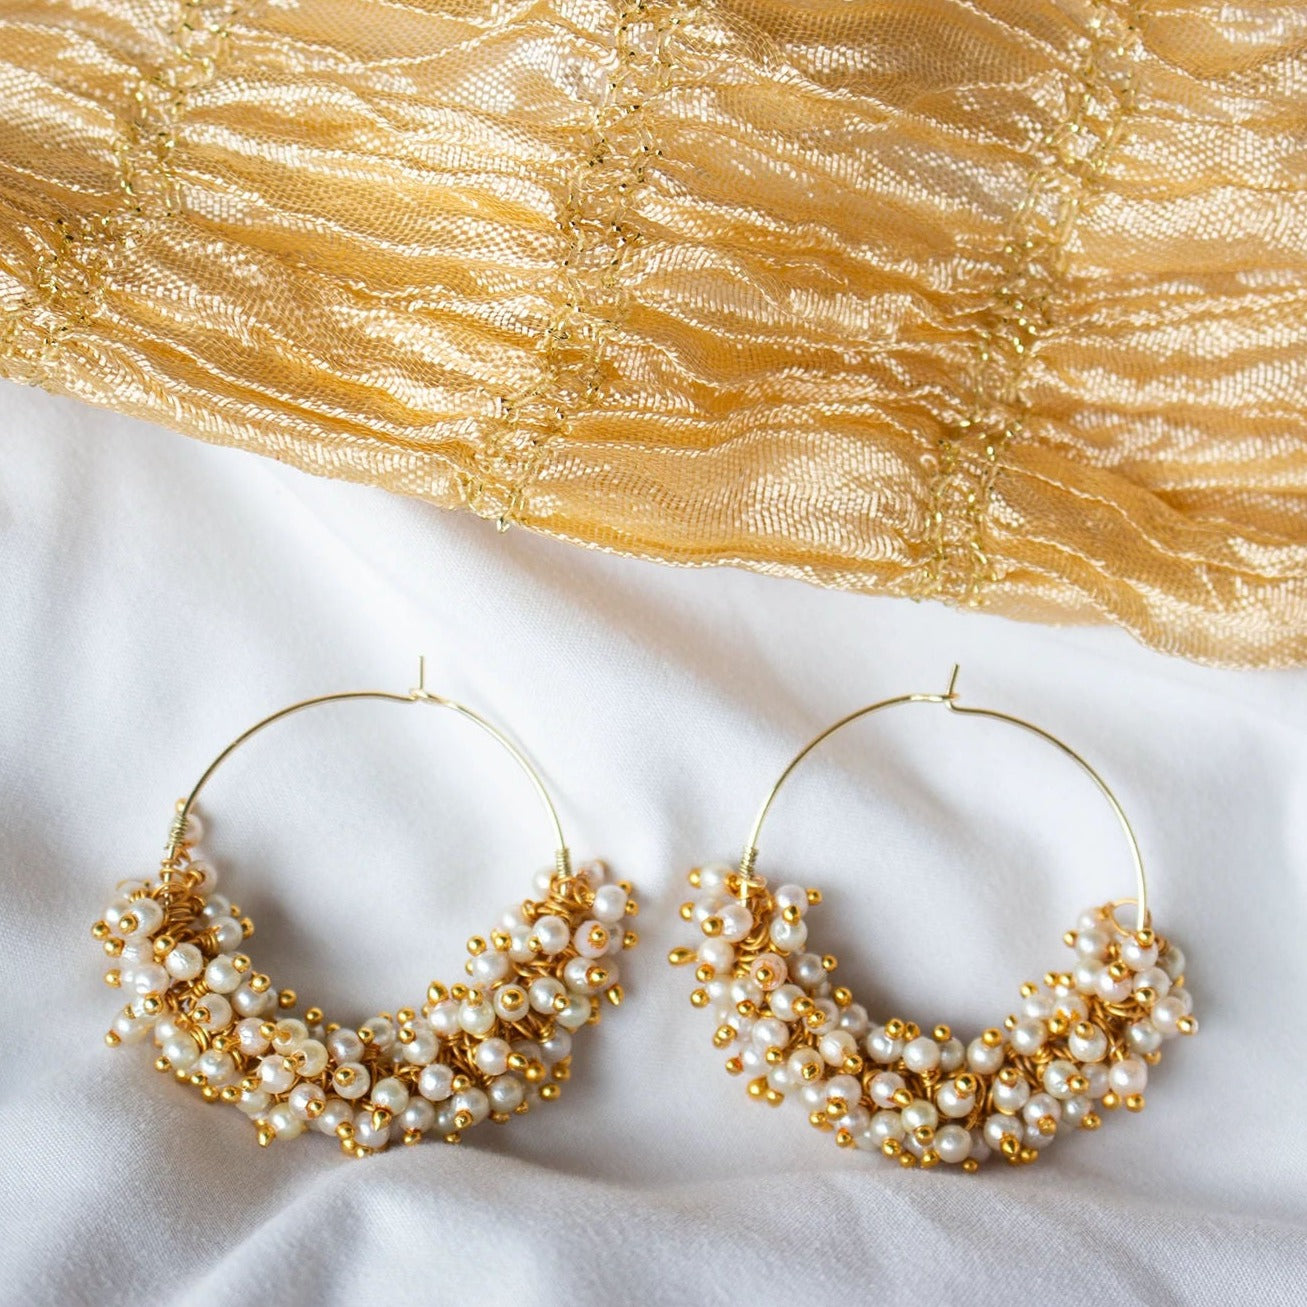 Champagne bubbles earrings by Beadaful